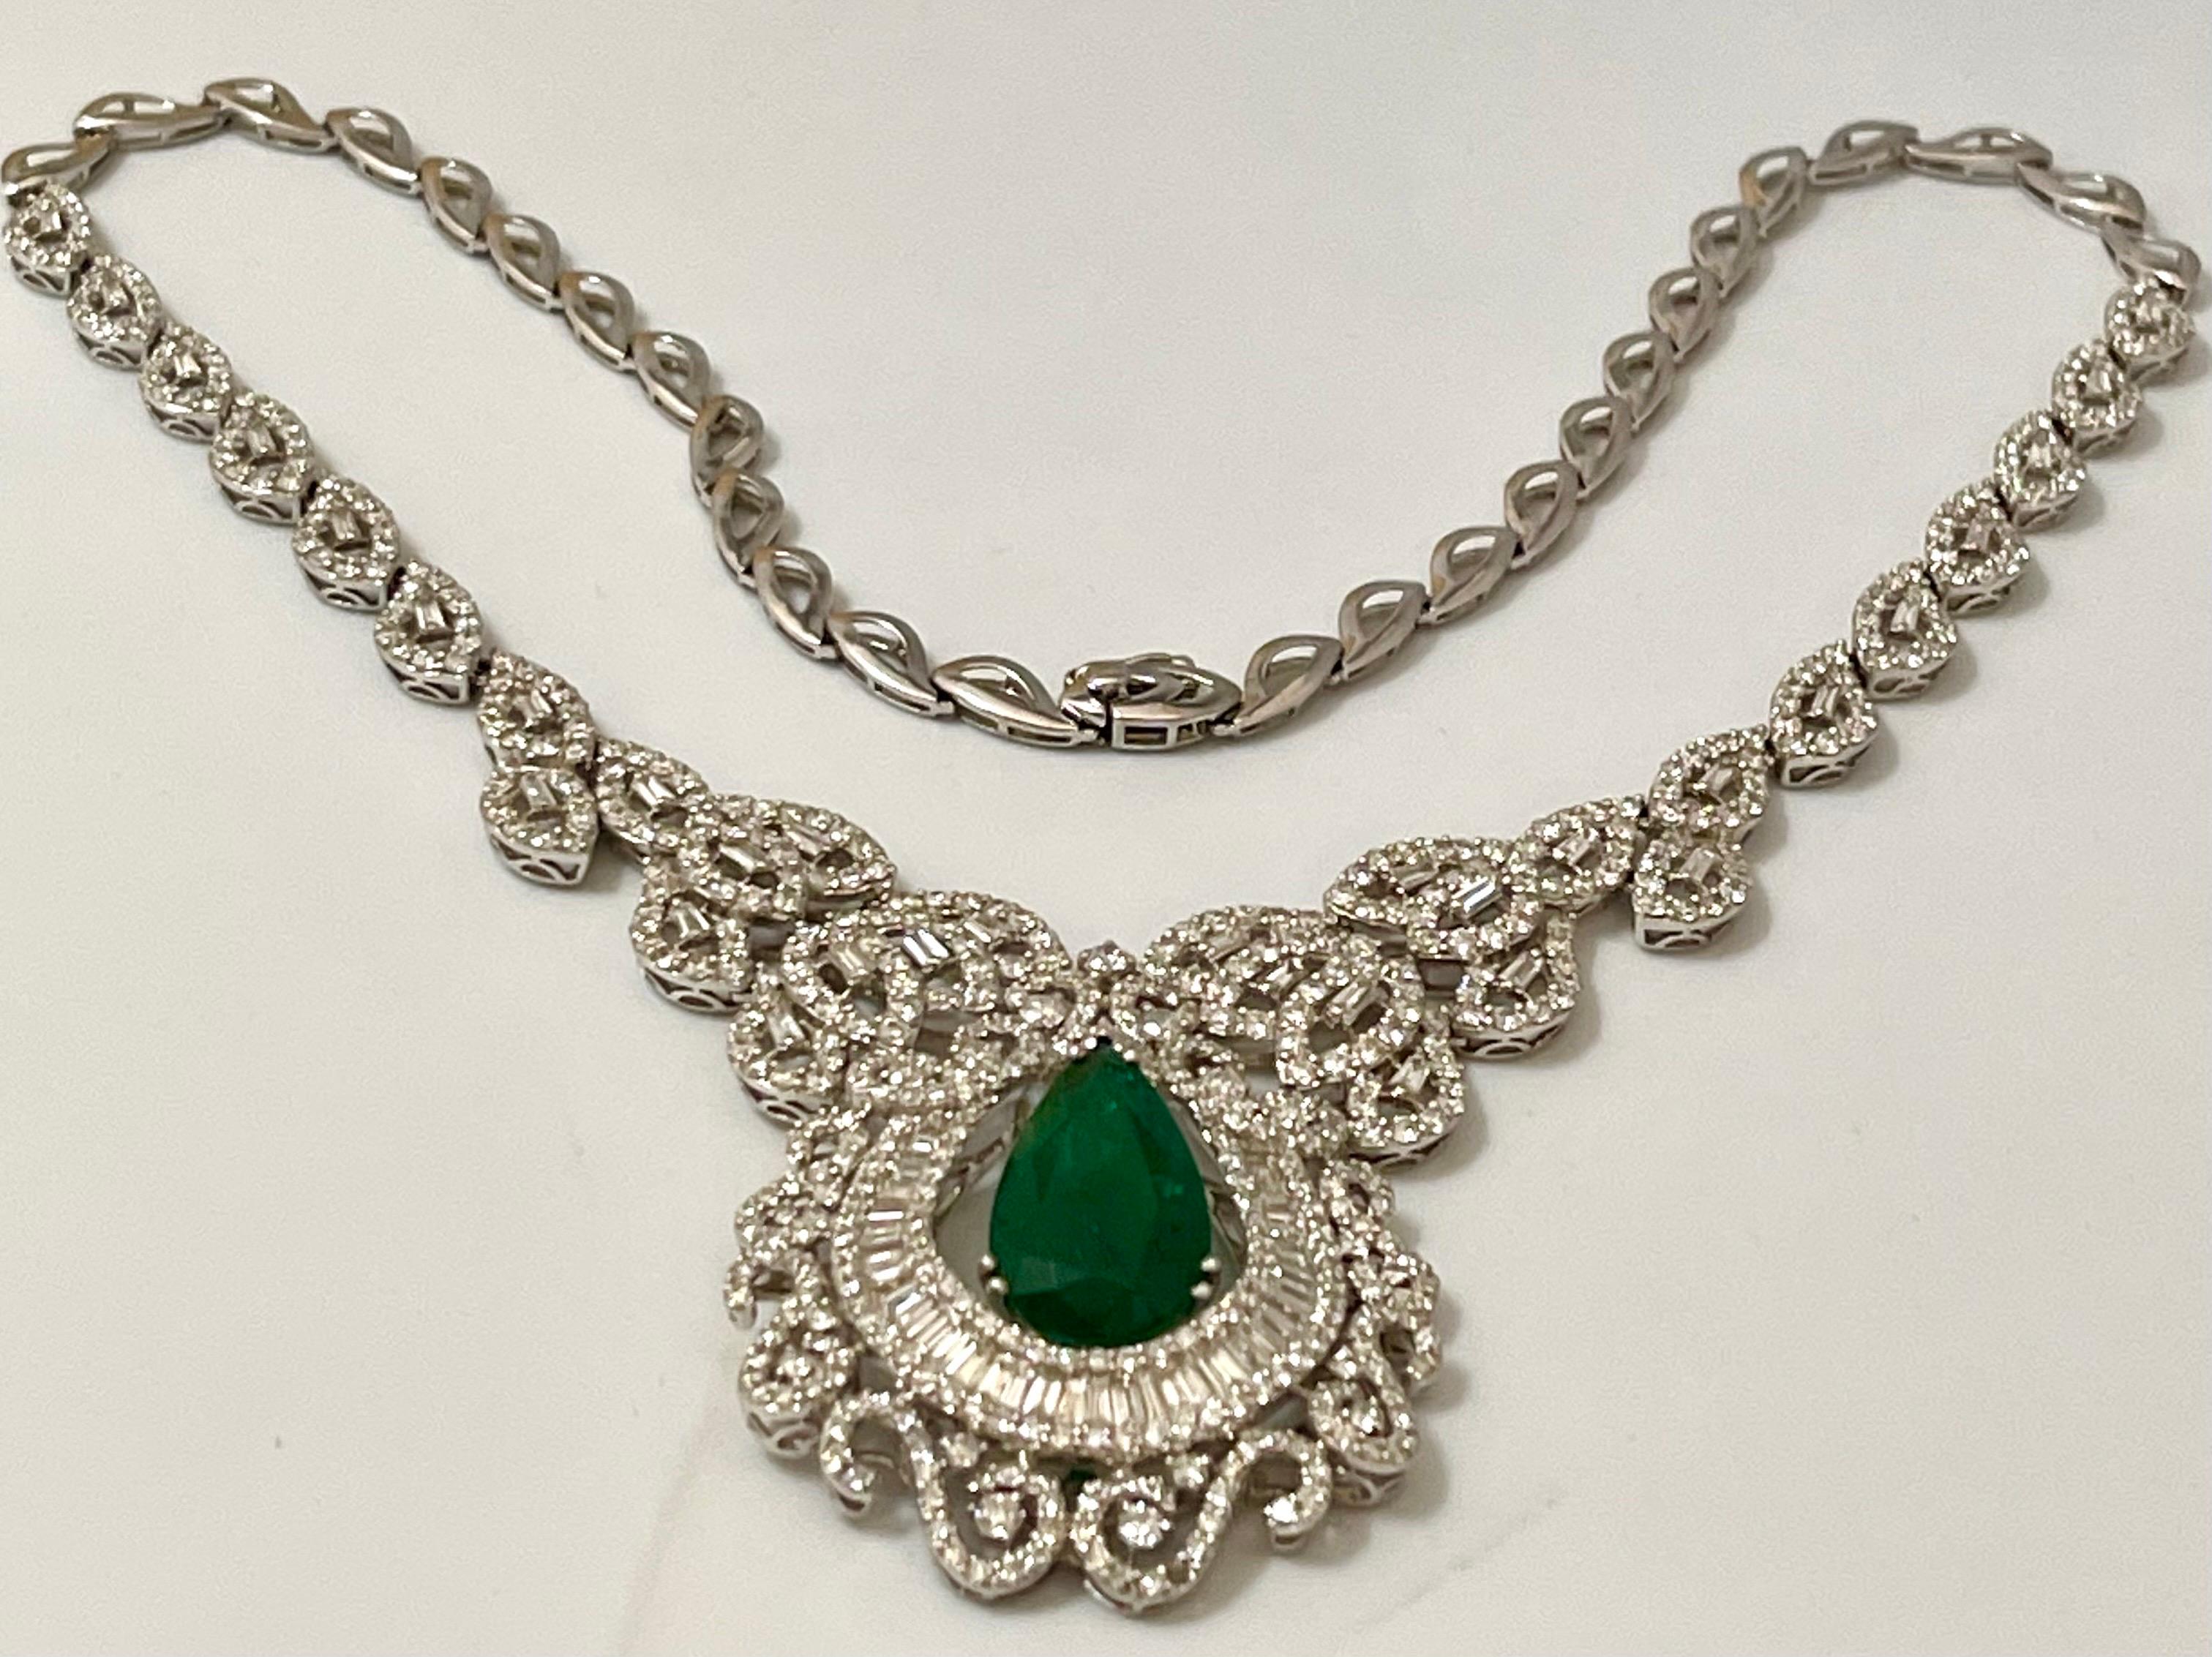 11 Ct Pear Shape Zambian Natural Emerald & 17 Ct Diamond Necklace 18 Karat Gold For Sale 3